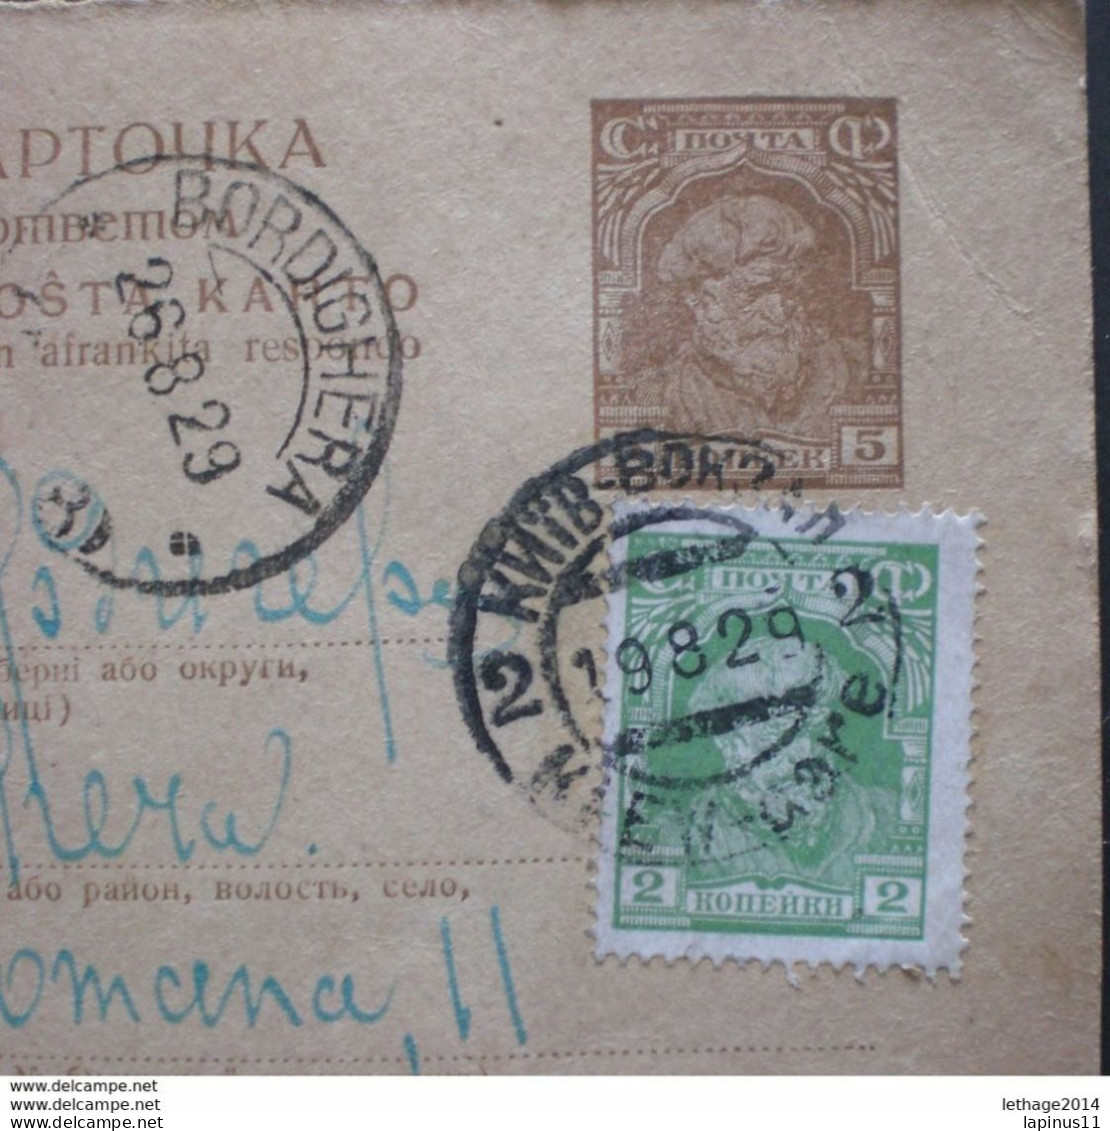 RUSSIA RUSSIE РОССИЯ STAMPS POST CARD 1929 TRICENTENAIRE DE L AVENEMENT DE ROMANOW RUSSLAND TO ITALY RRR RIF. TAGG (161) - Briefe U. Dokumente